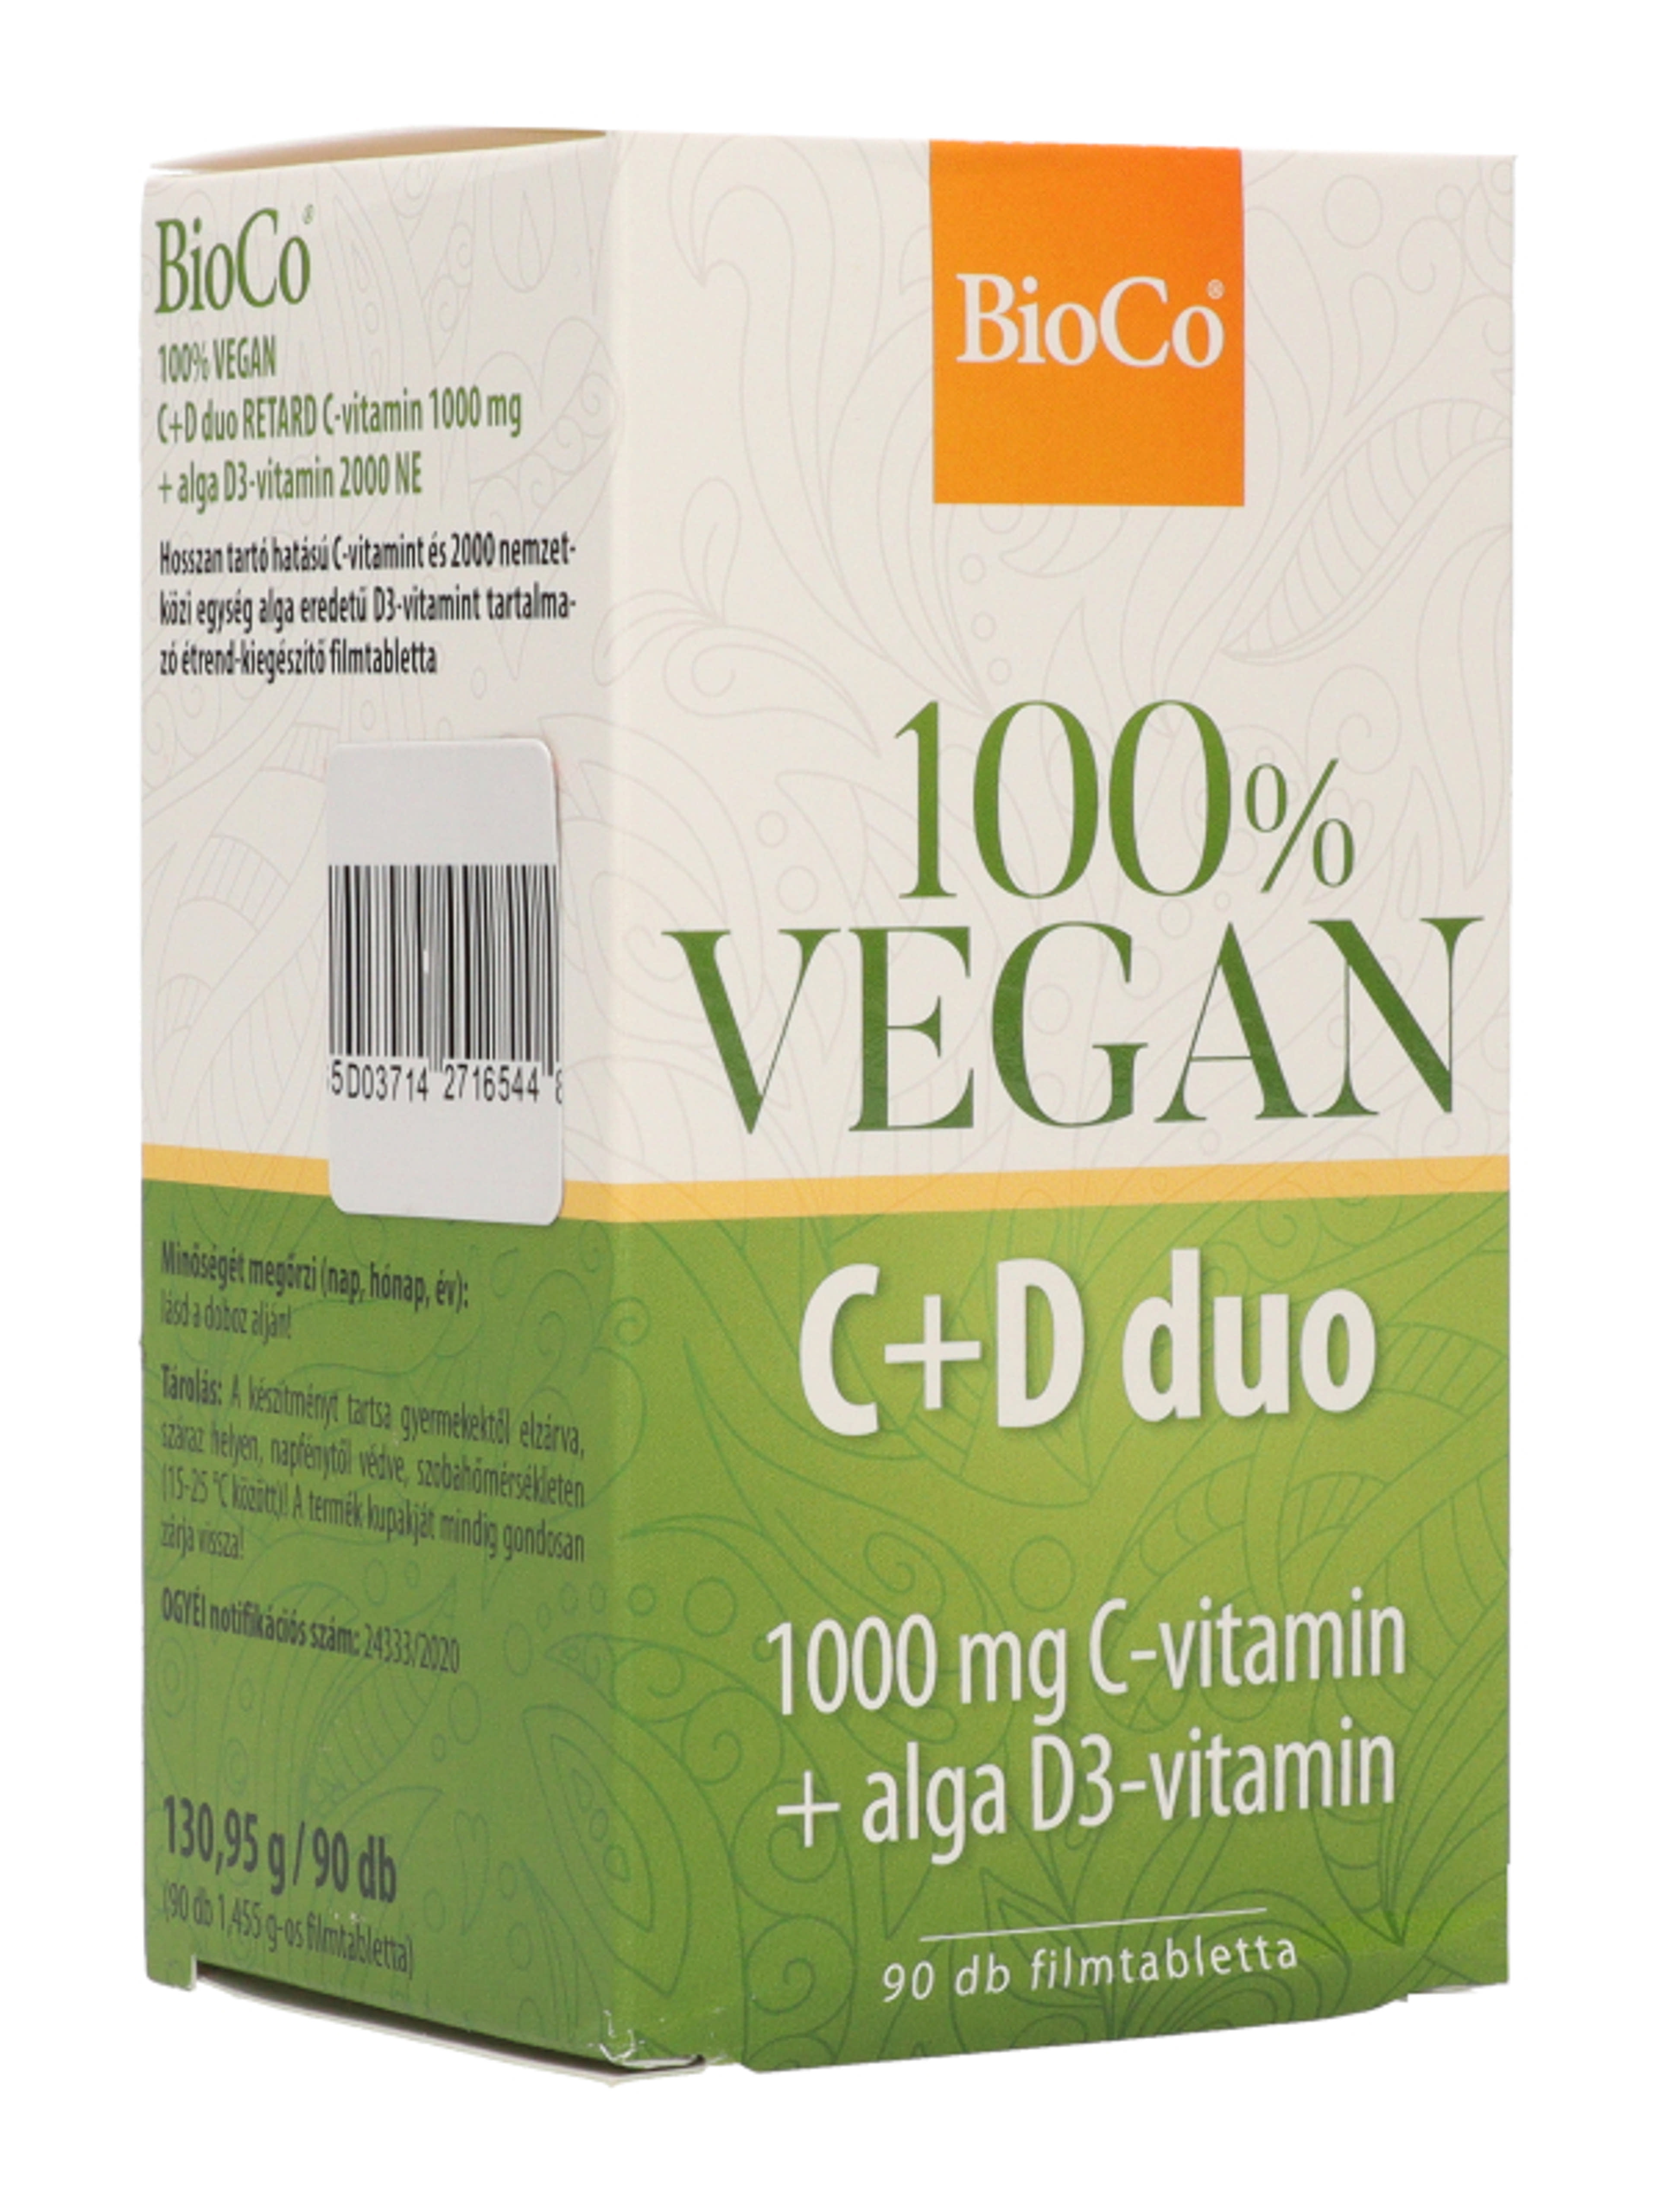 Bioco vegán C+D duo filmtabletta - 90 db-6